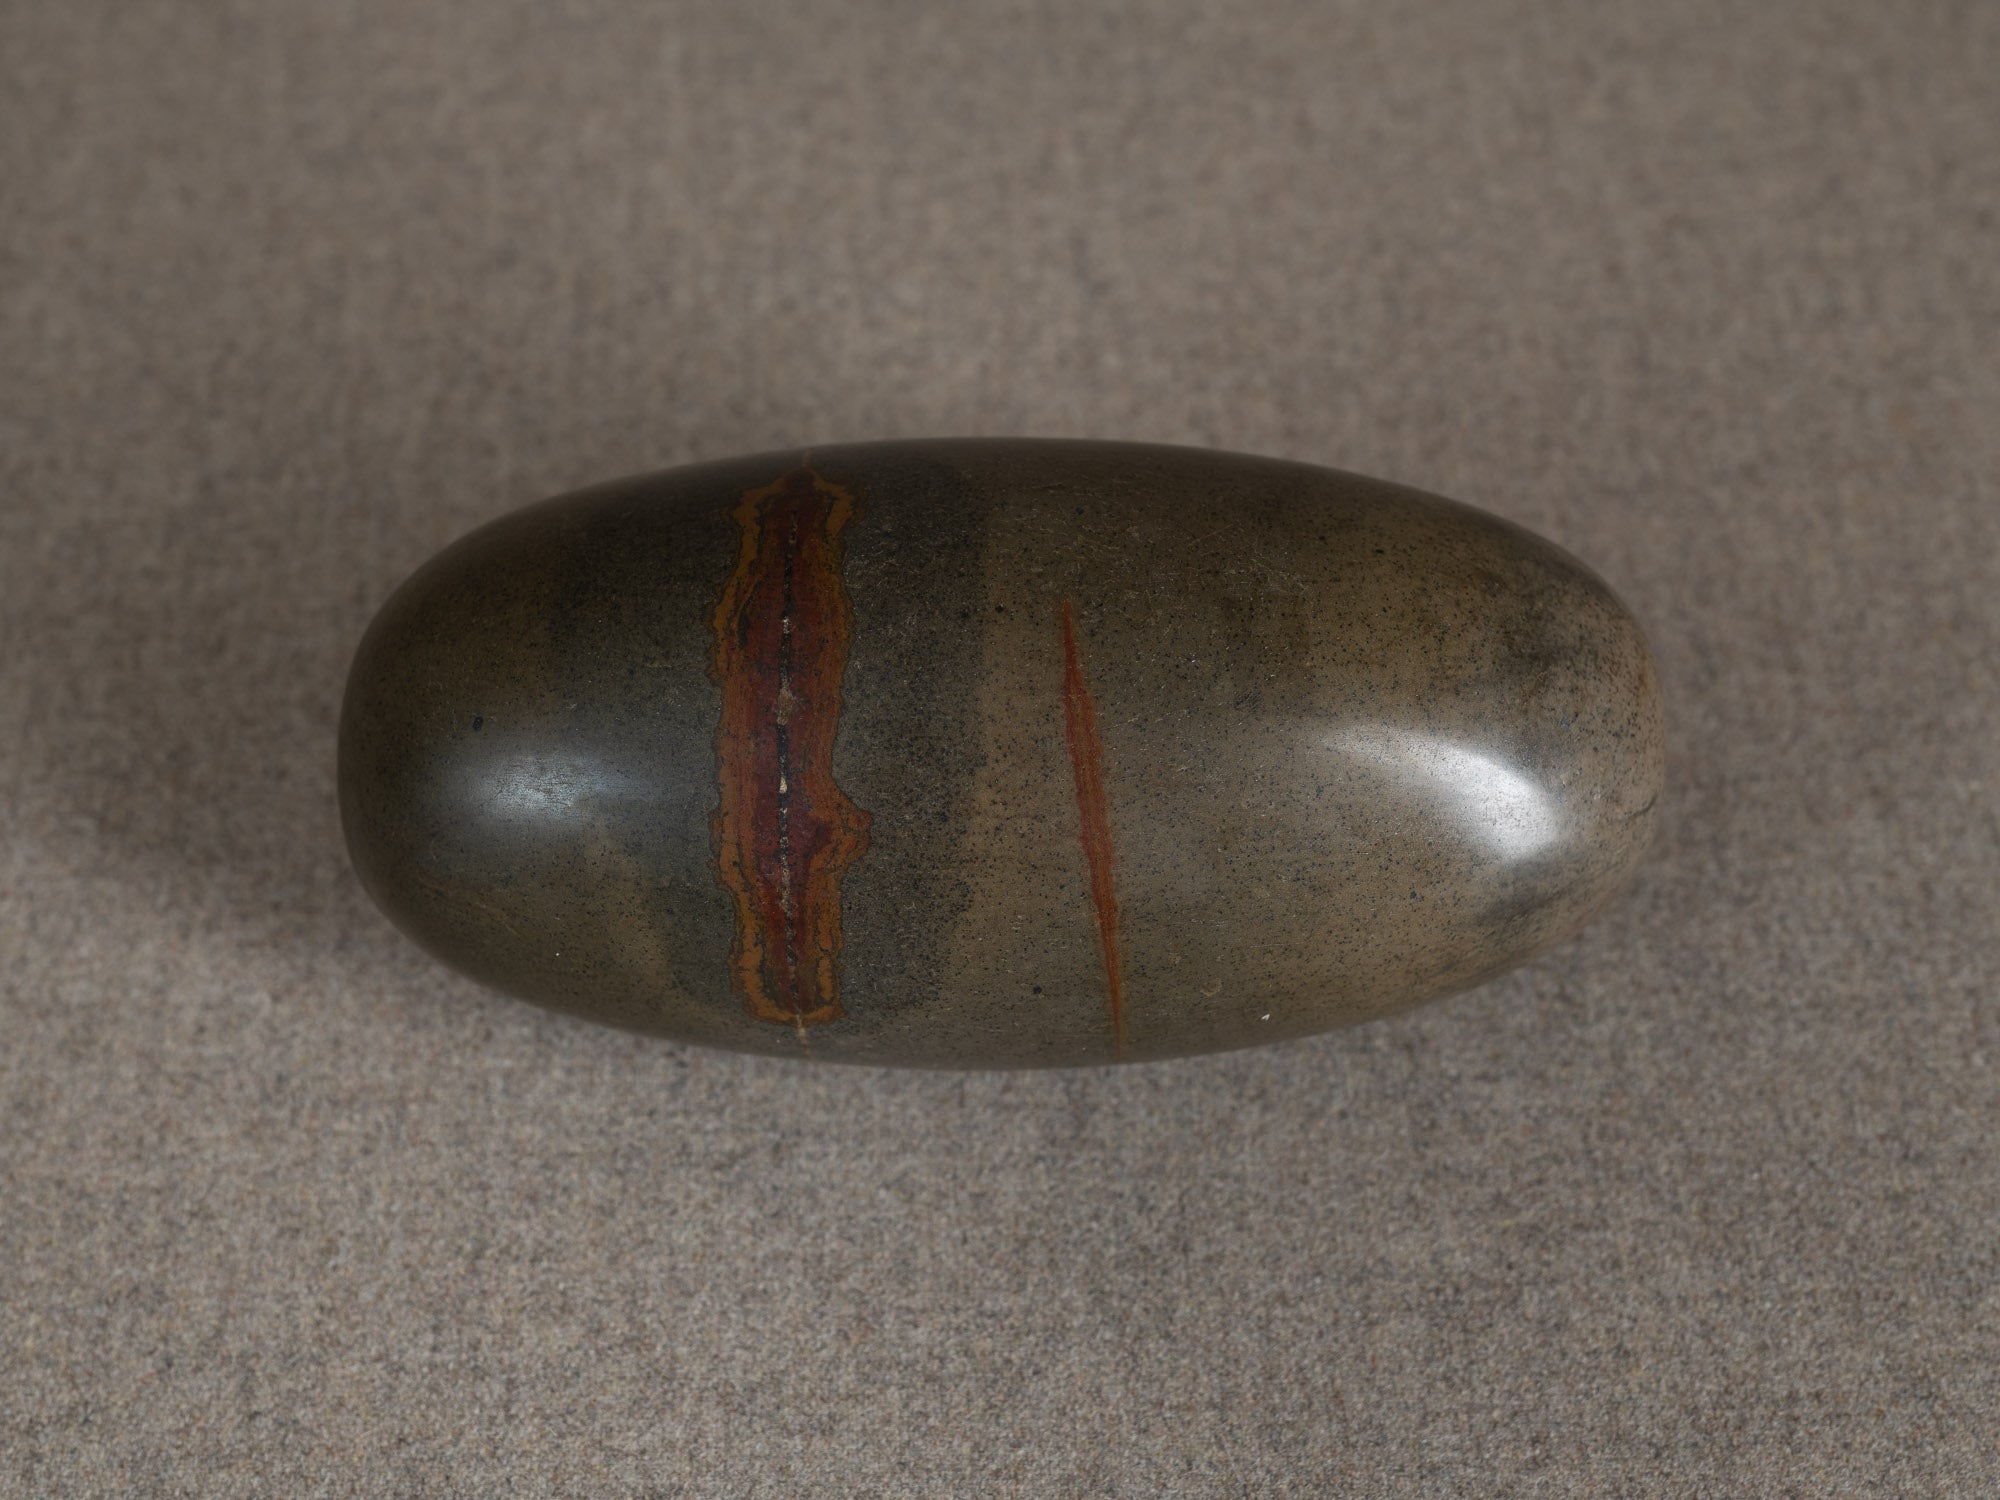 Shiva Lingam "œuf cosmique", jaspe sacrée hindouiste, Inde..Shiva Lingam "cosmic egg", hindu sacred jasper Narmada river stone, India